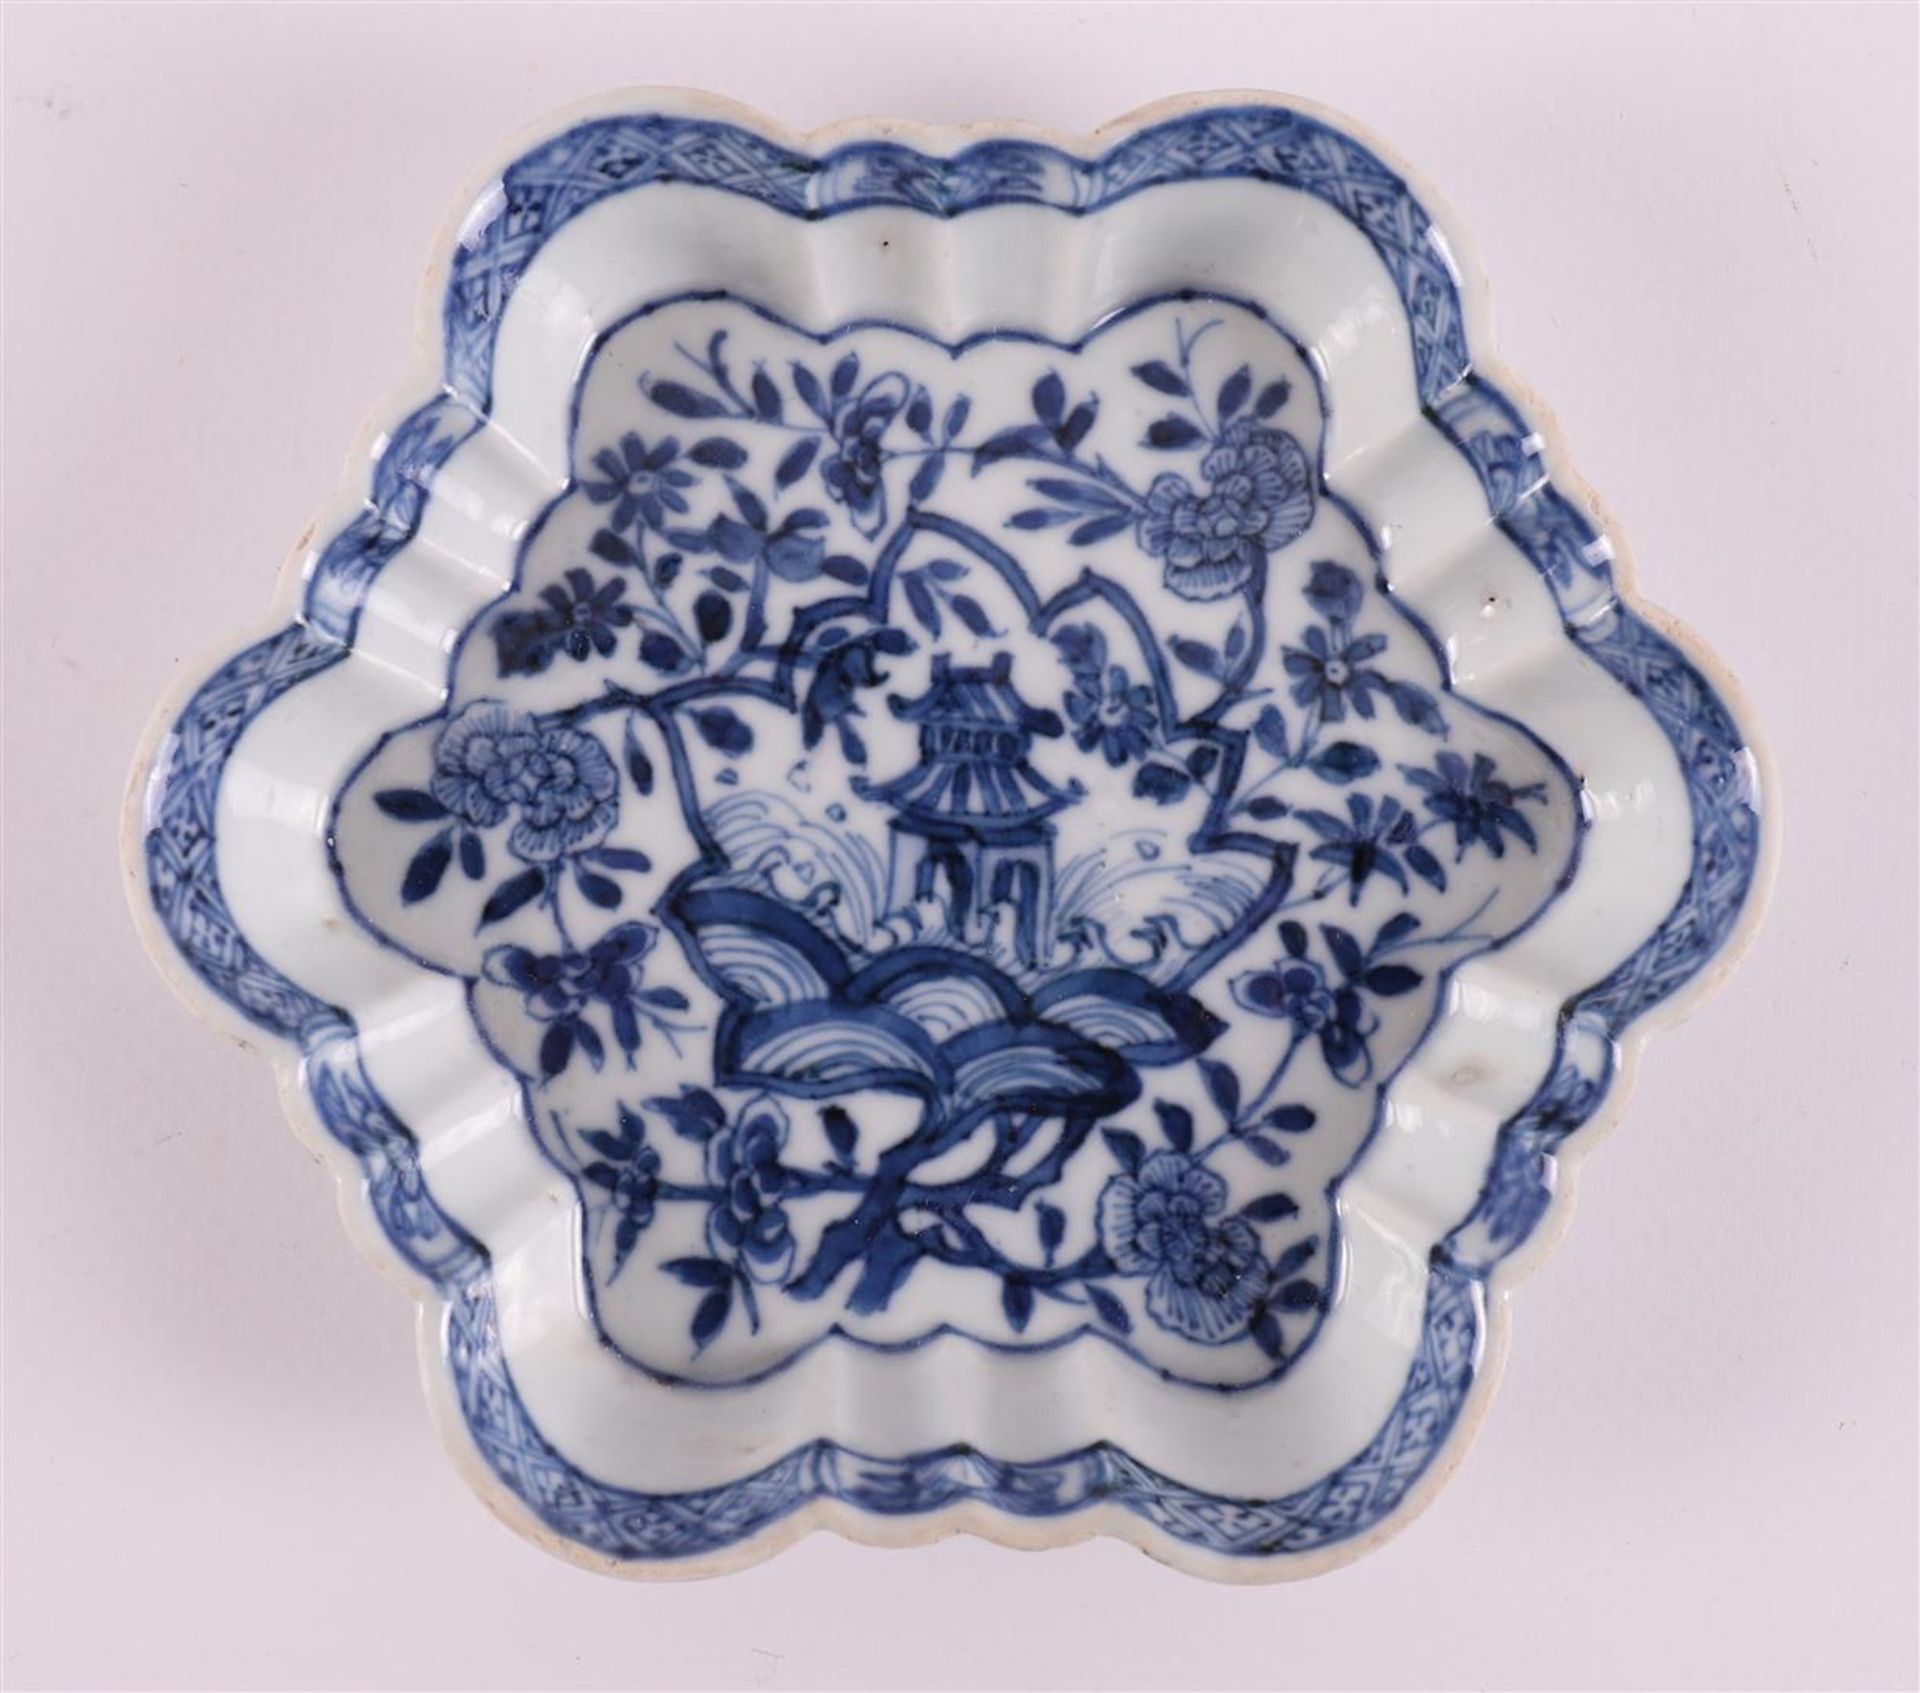 A blue/white scalloped porcelain pattipan, China, Younzheng, 18th century.